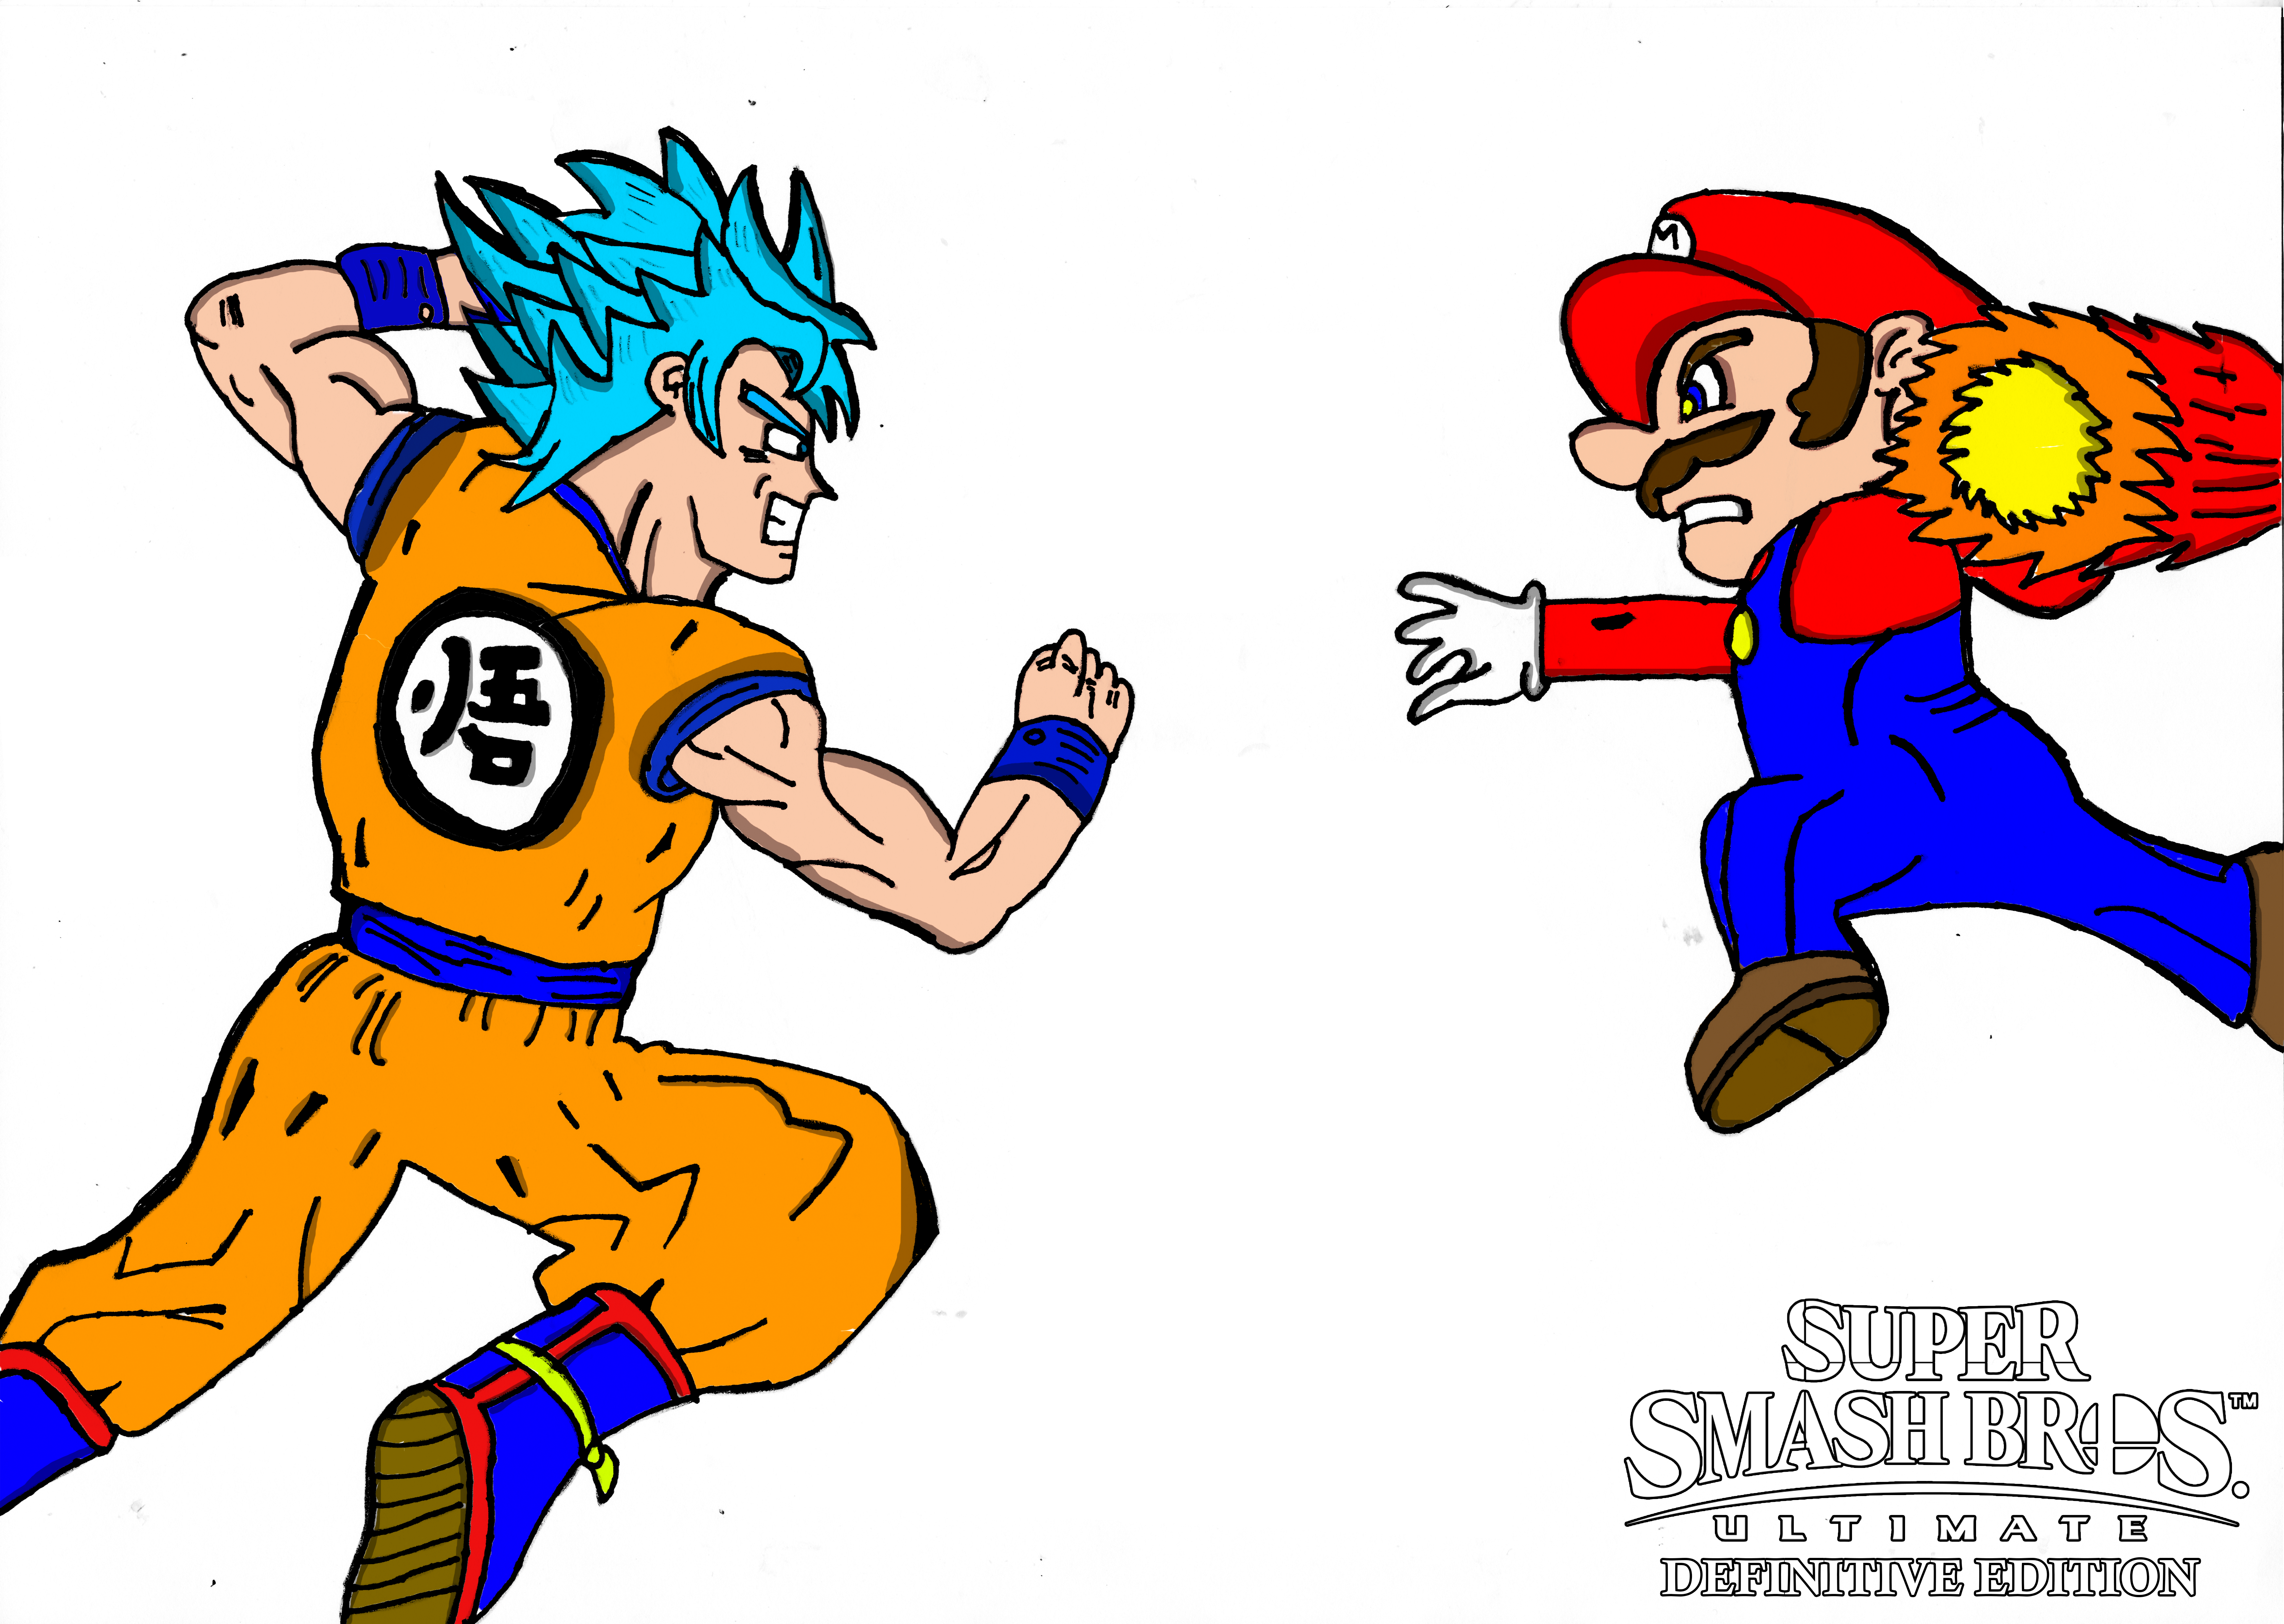 SSB Project Multiverse - Mario VS Goku (Art) by HiGuys920 on DeviantArt